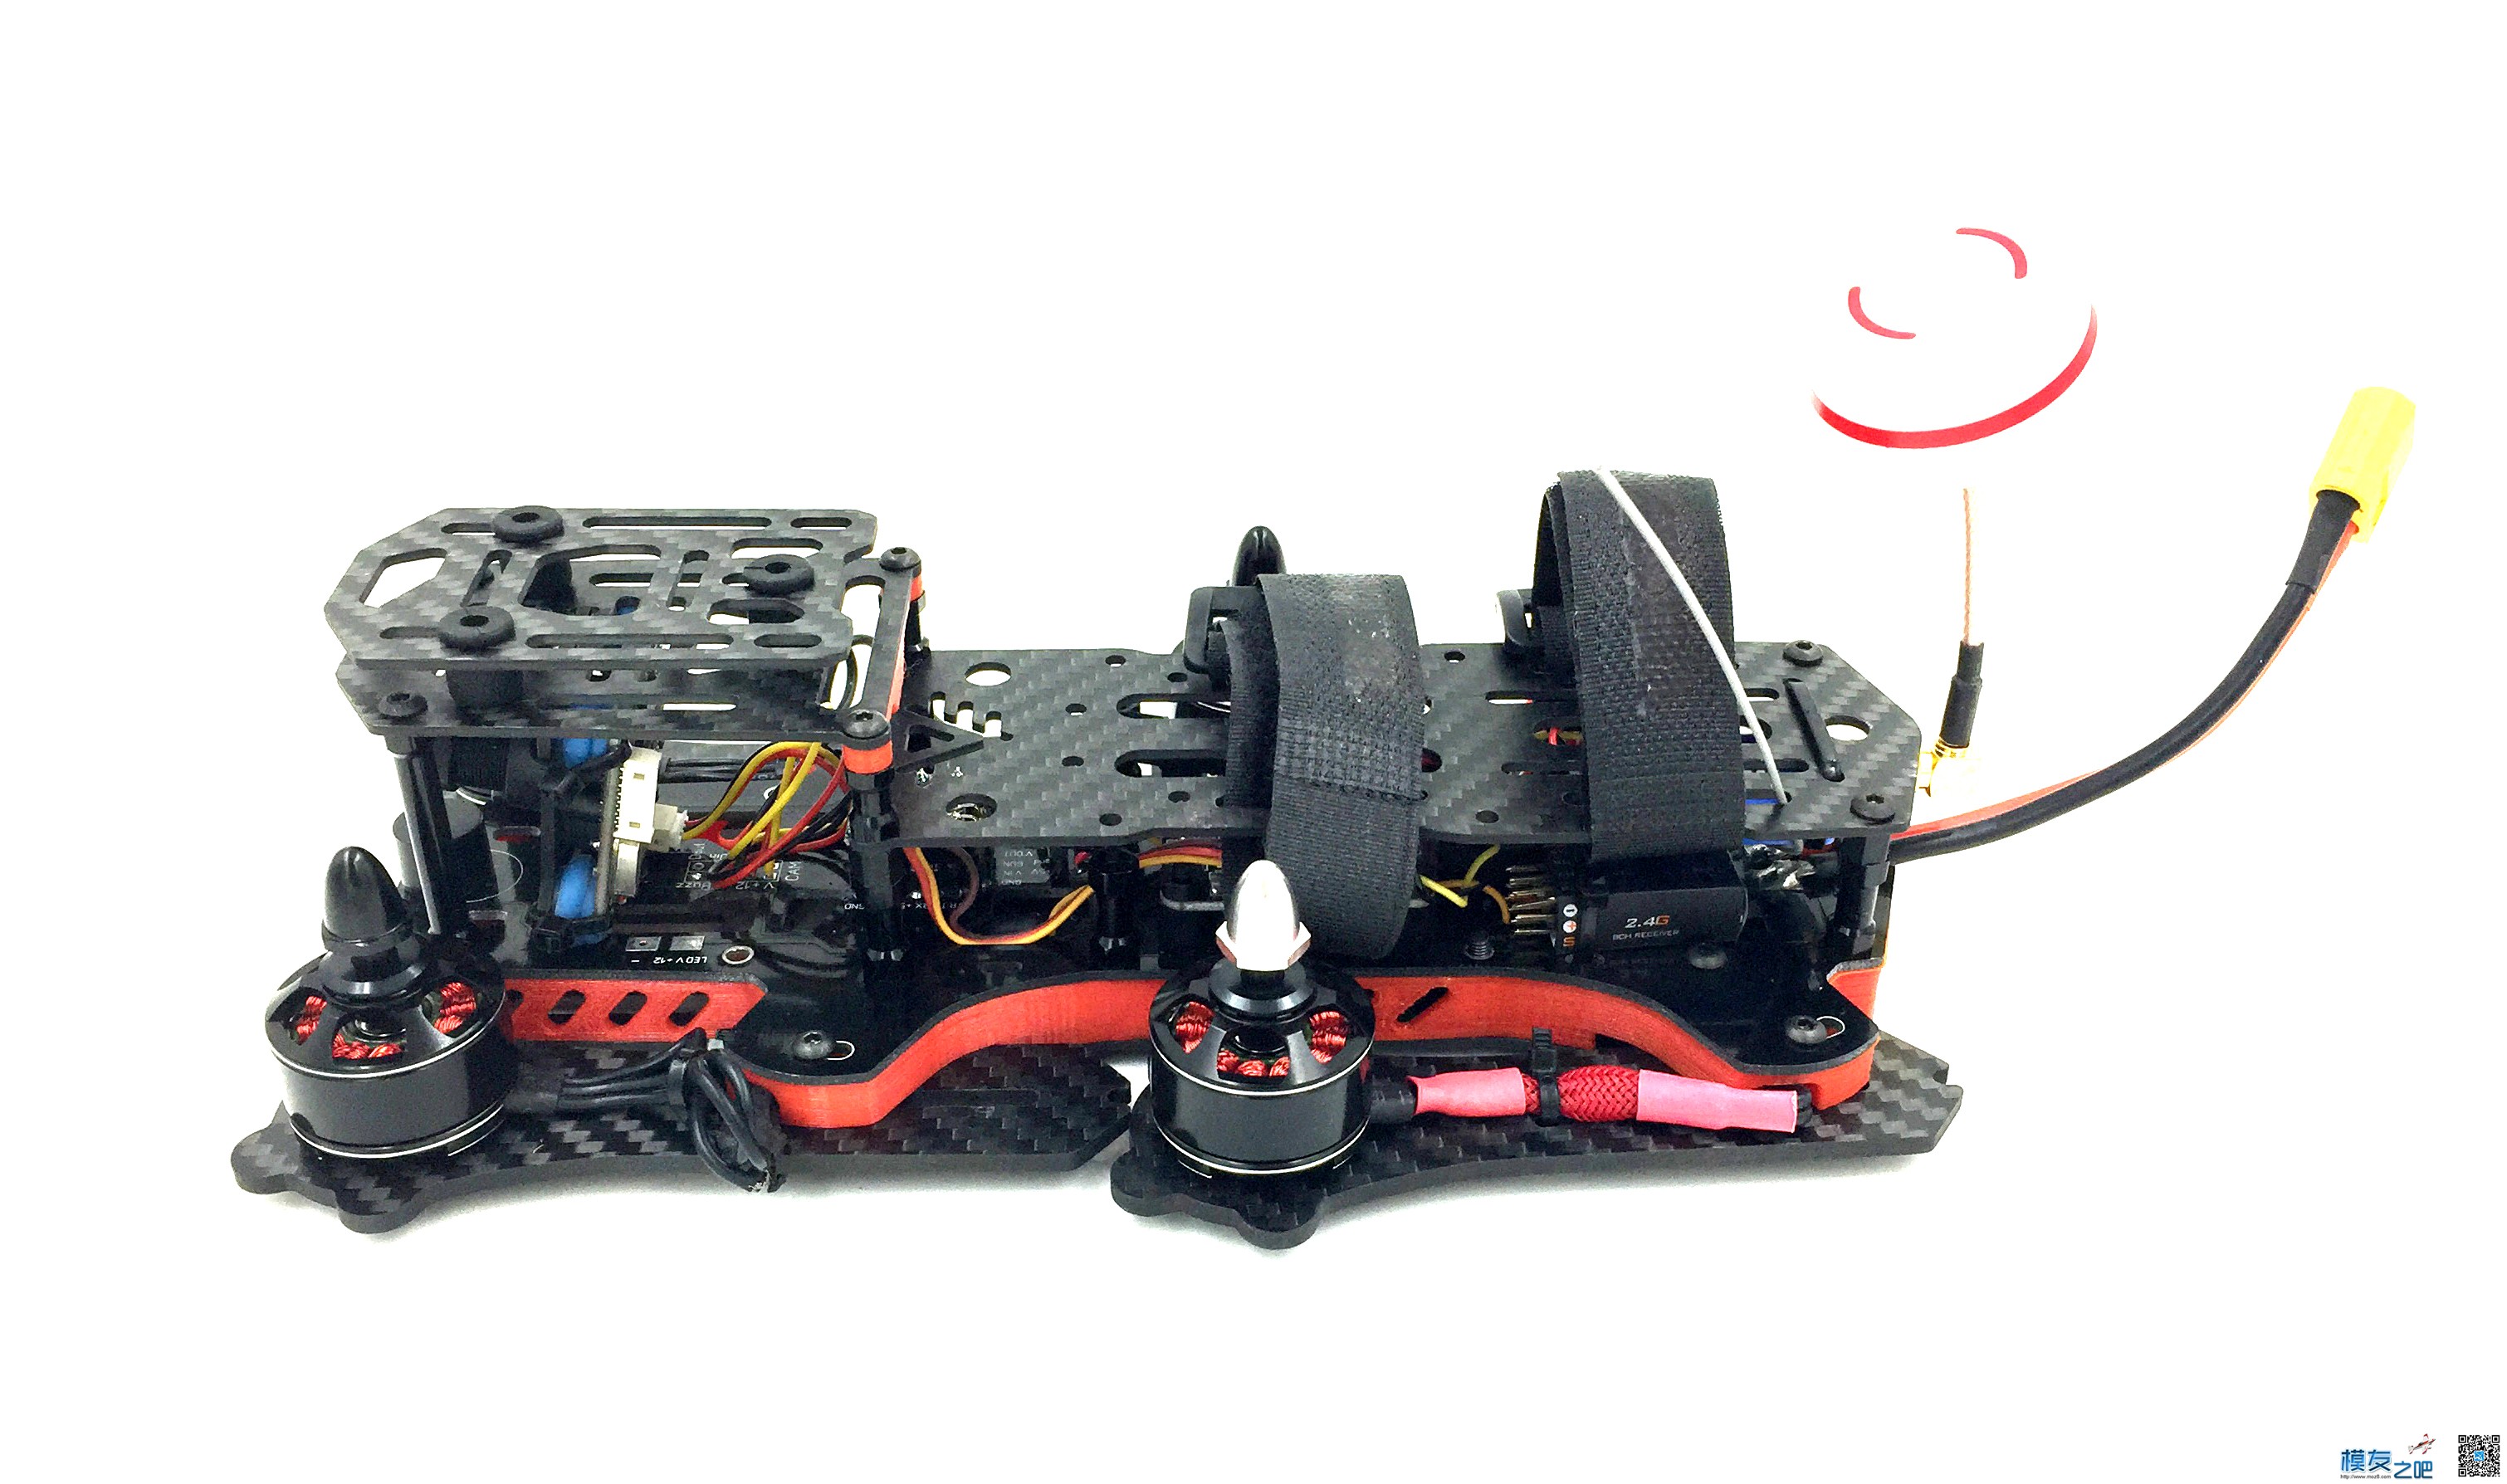 GE-FPV GE280Z  可折叠 集成线路机身板 3D打印件美化定妆照 穿越机,电池,云台,飞控,电调 作者:GE-FPV 4647 